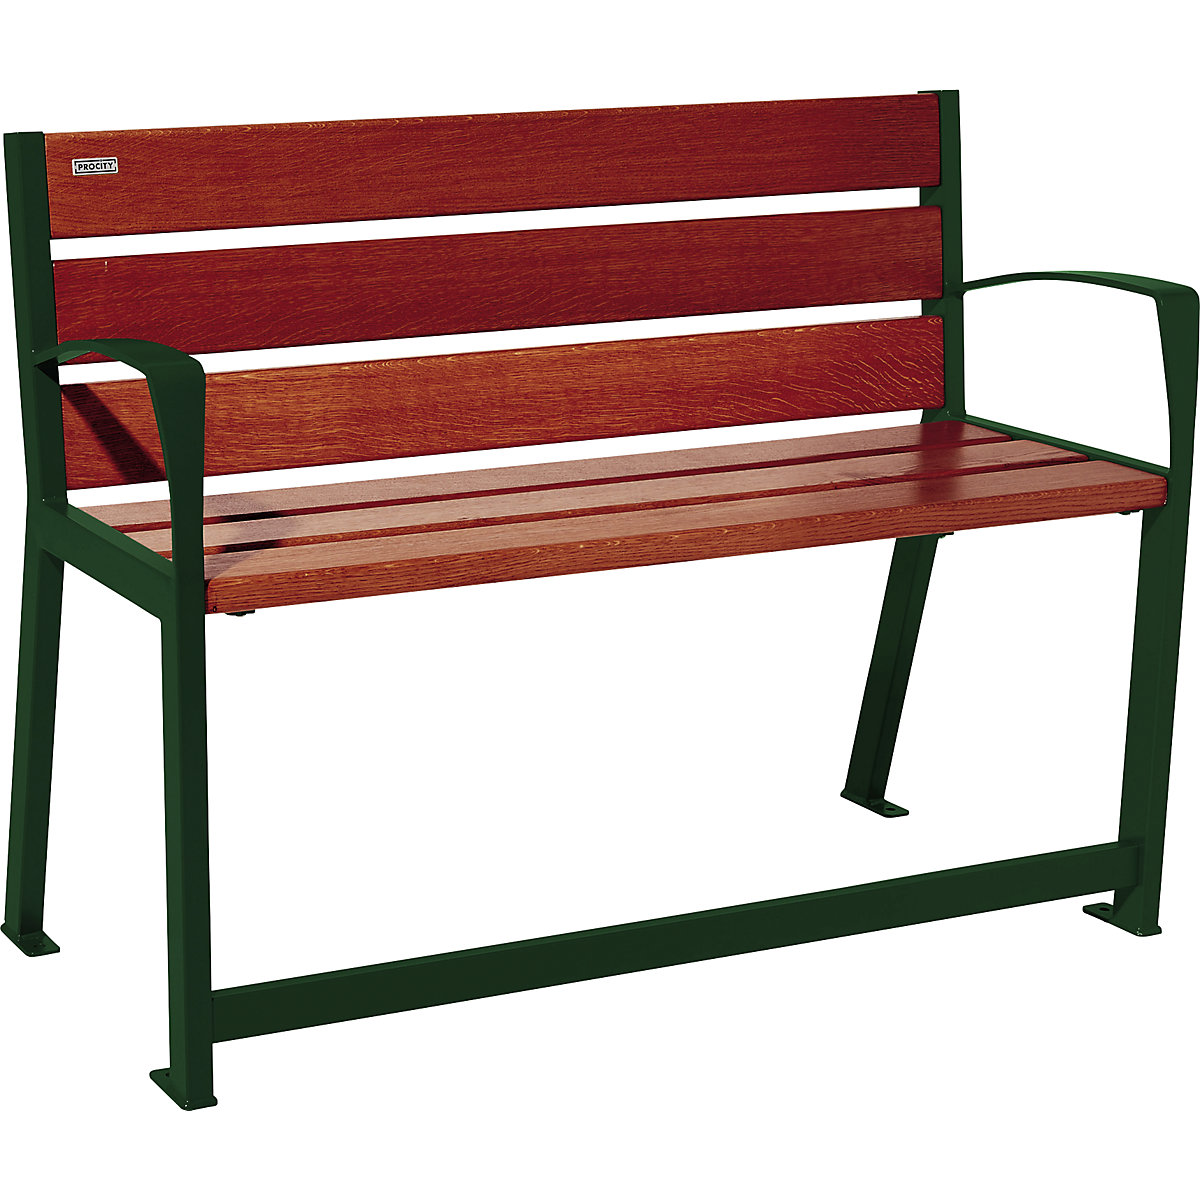 Sitzbank SILAOS® aus Holz PROCITY, mit Rückenlehne, für Senioren, Länge 1200 mm, moosgrün, mahagoni-6